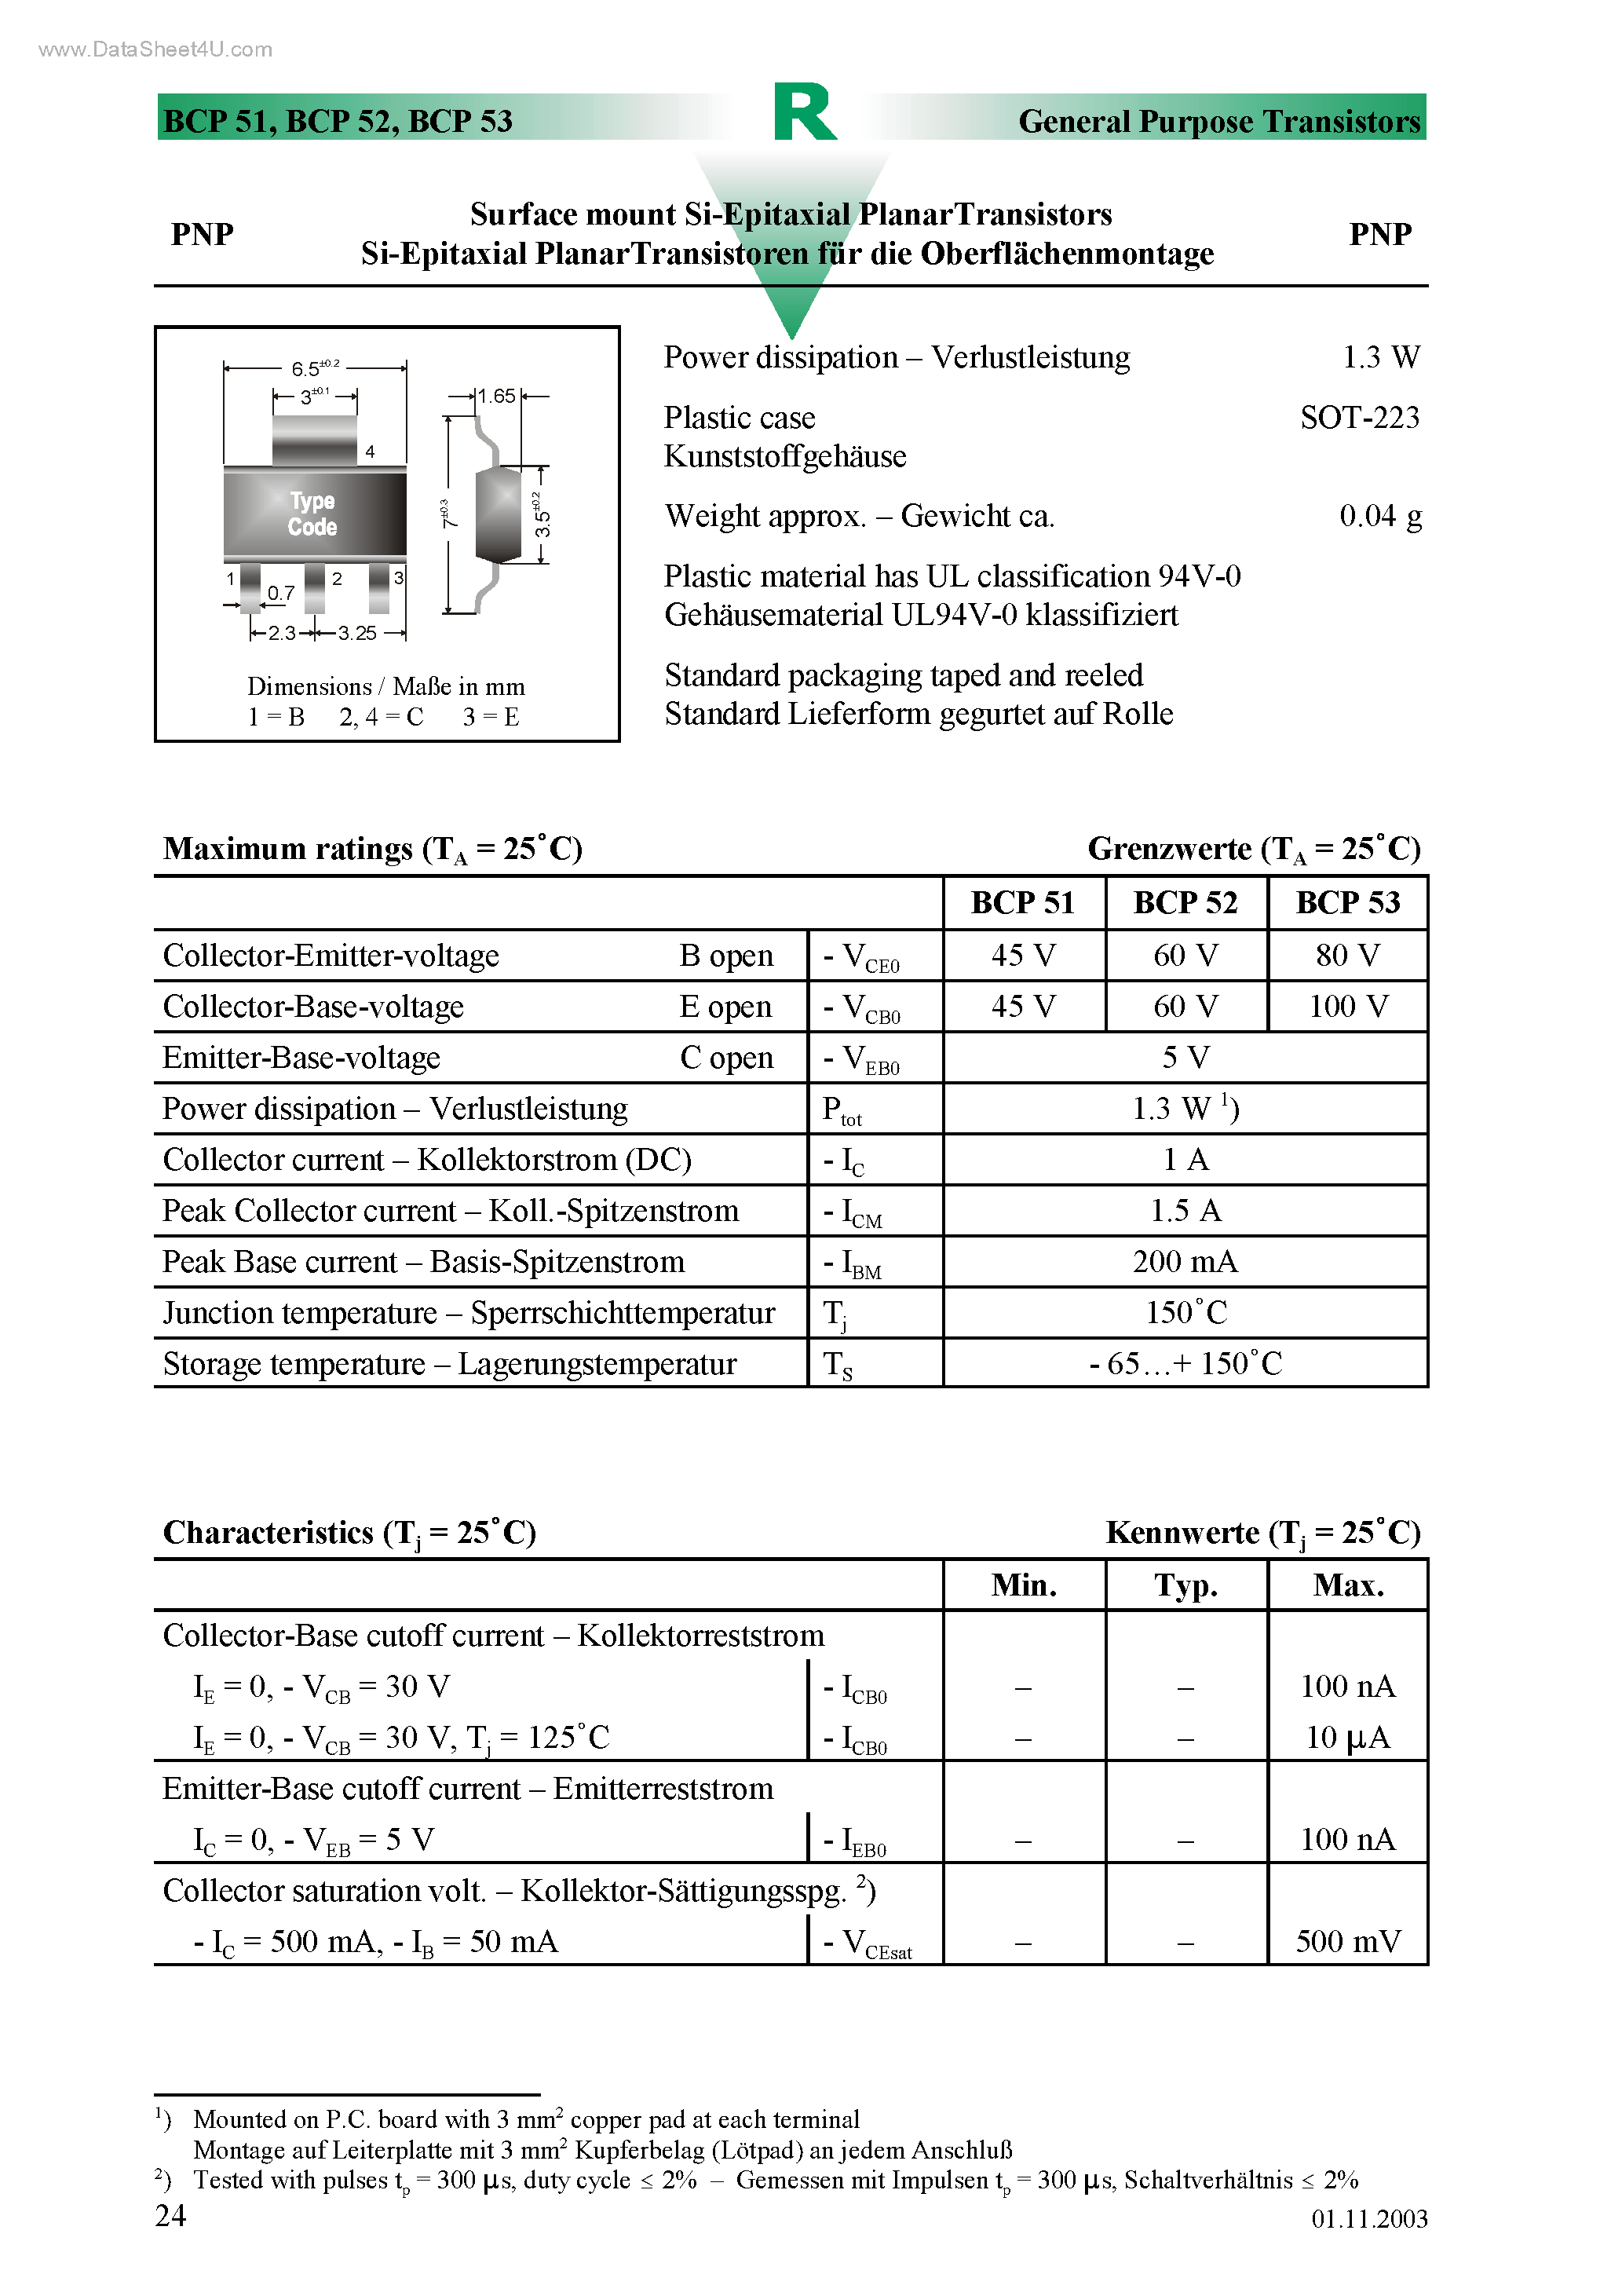 Даташит BCP52 - Surface mount Si-Epitaxial PlanarTransistors страница 1